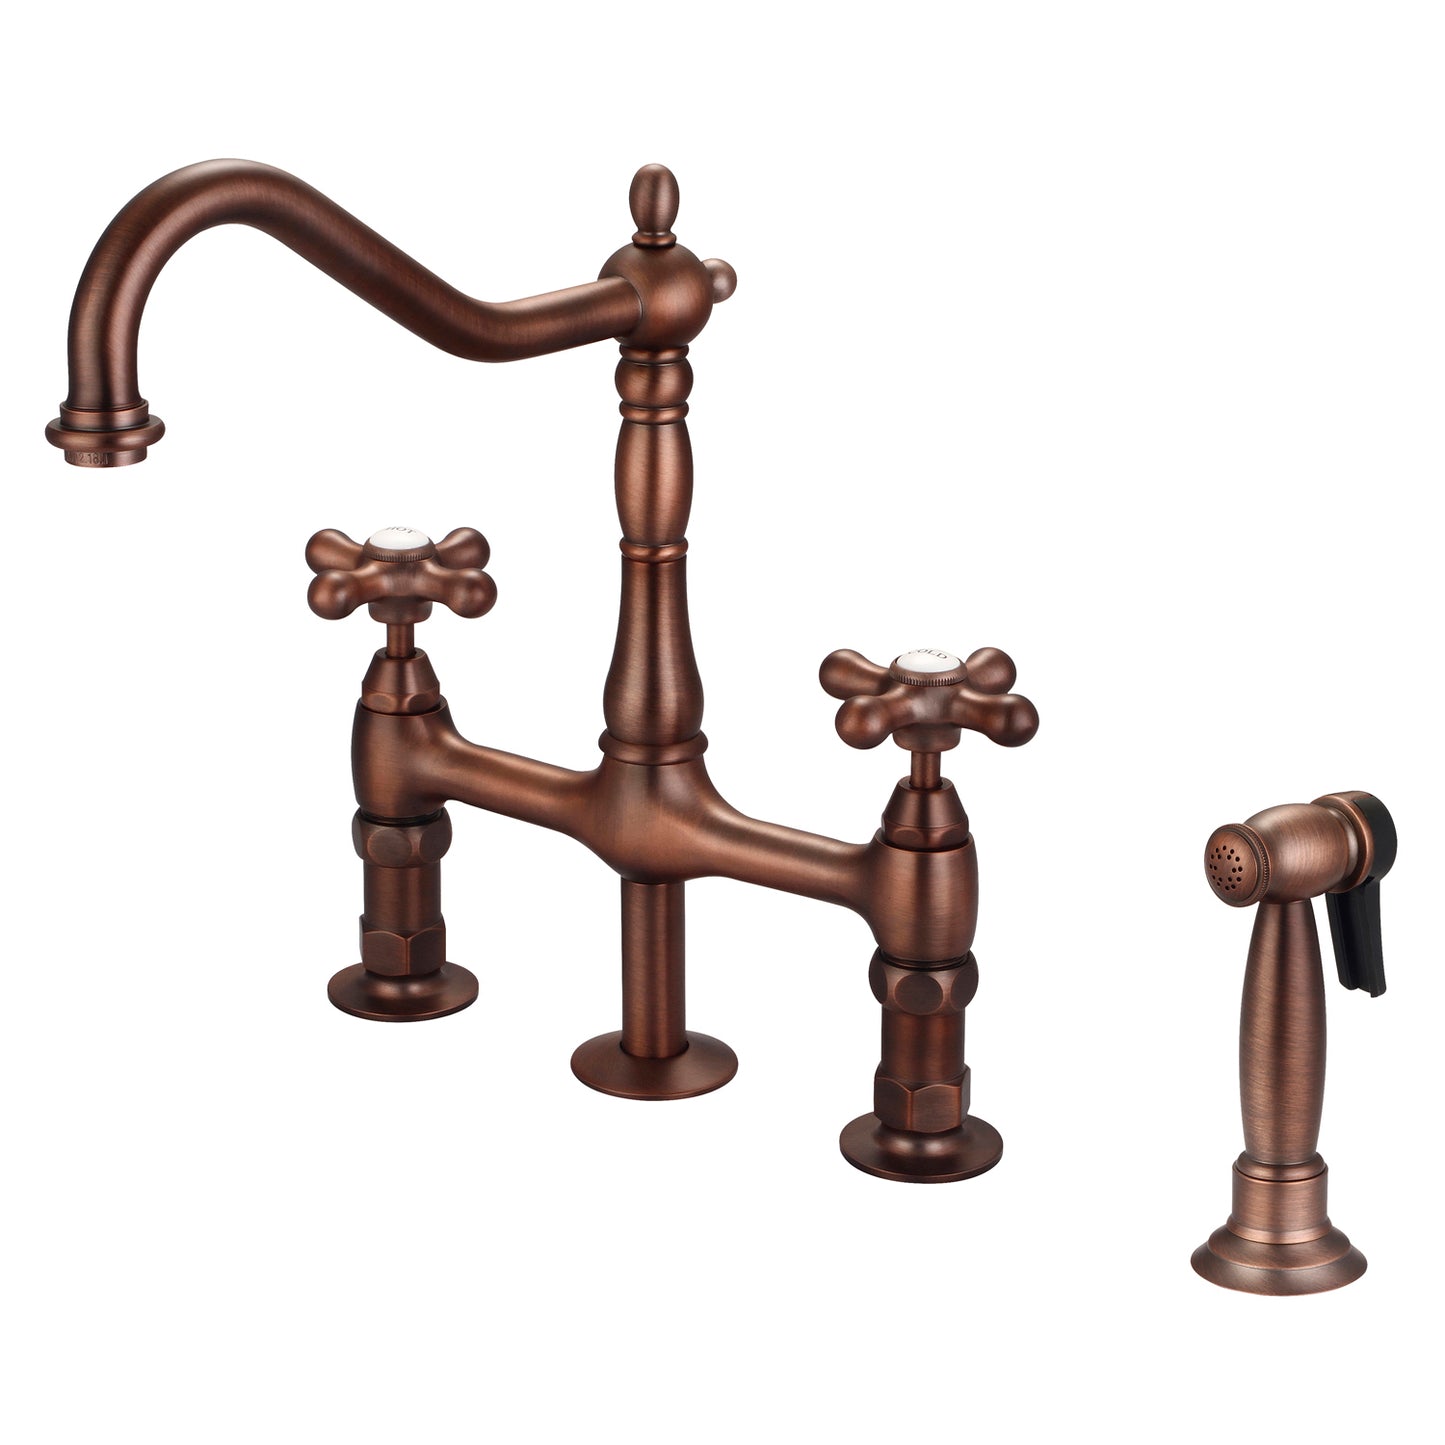 Emral Kitchen Bridge Faucet, Sidesprayer & Metal Cross Handles, Oil Rubbed Bronze